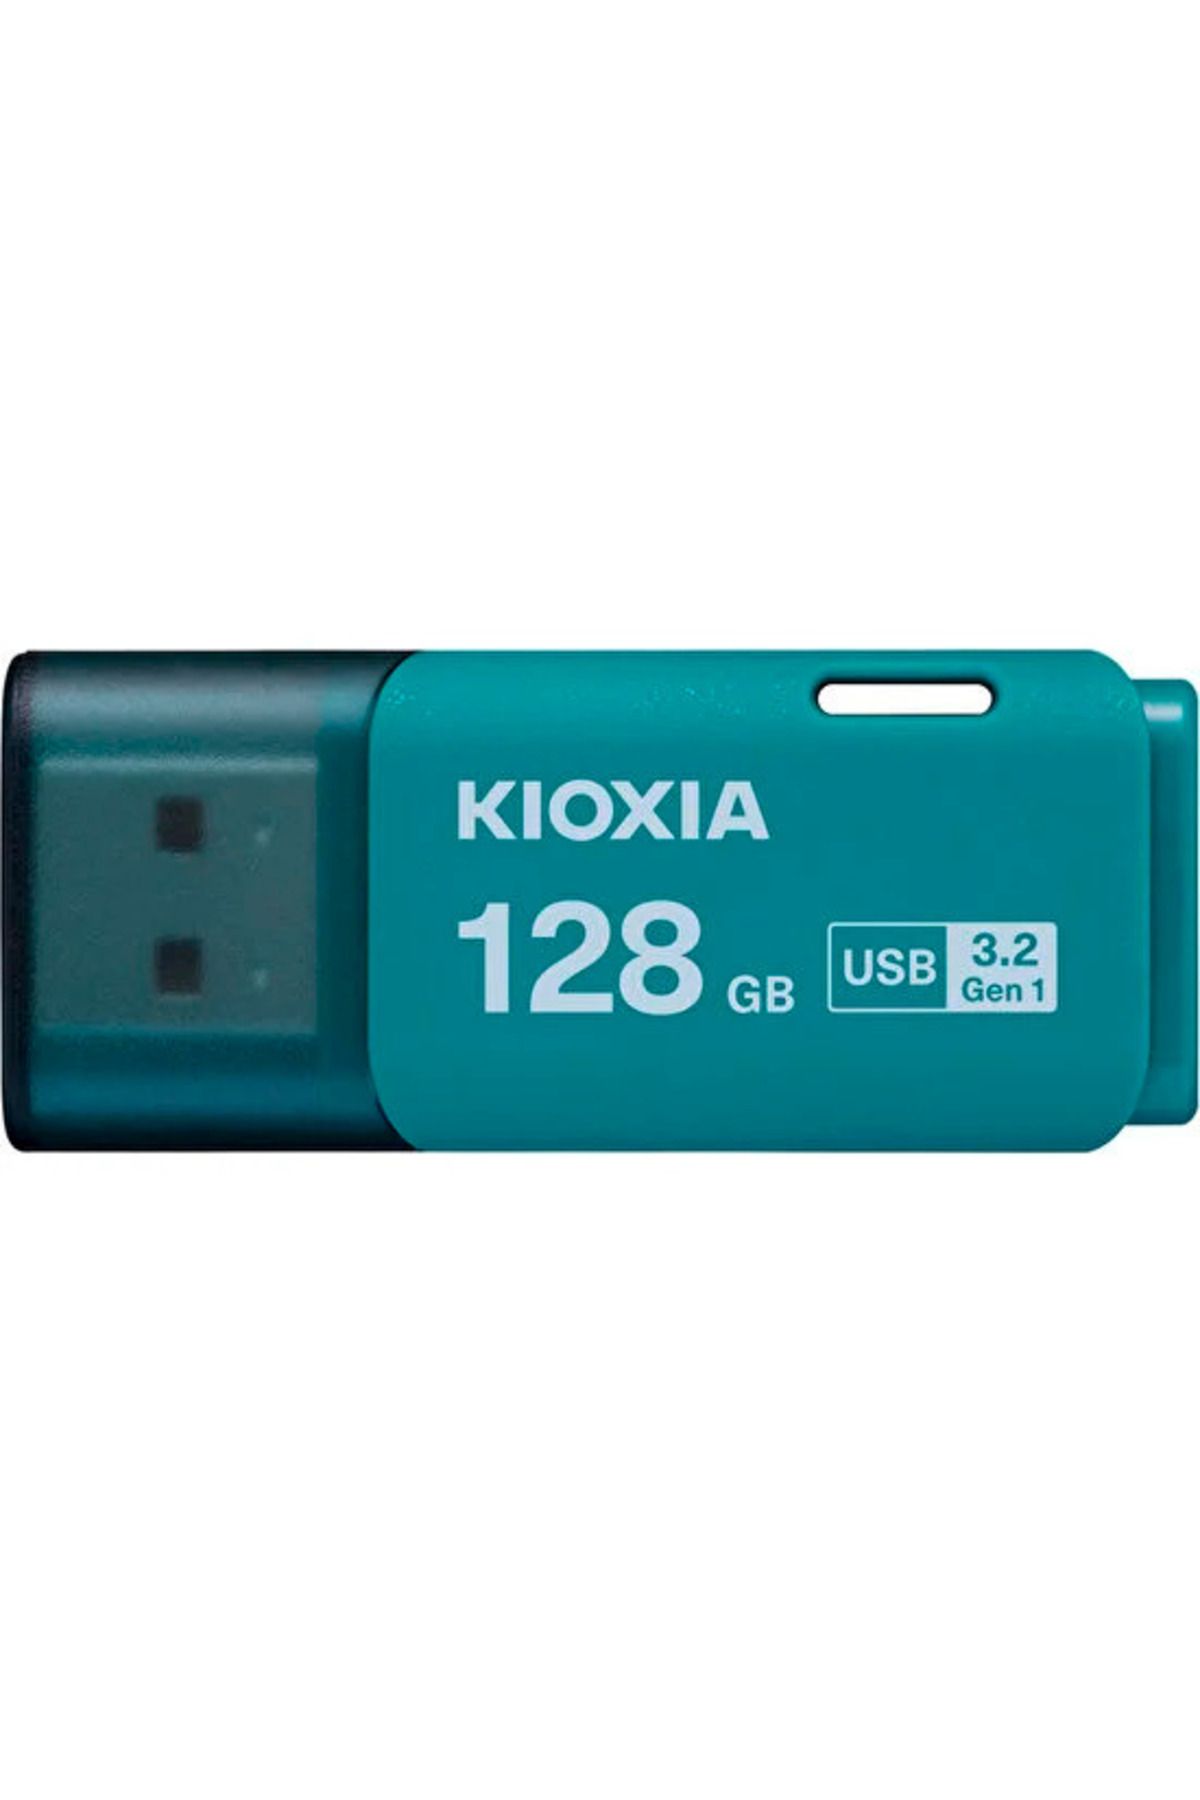 Kioxia Kıoxıa Transmemory U301 128 GB USB 3.2 Gen 1 LU301L128GG4